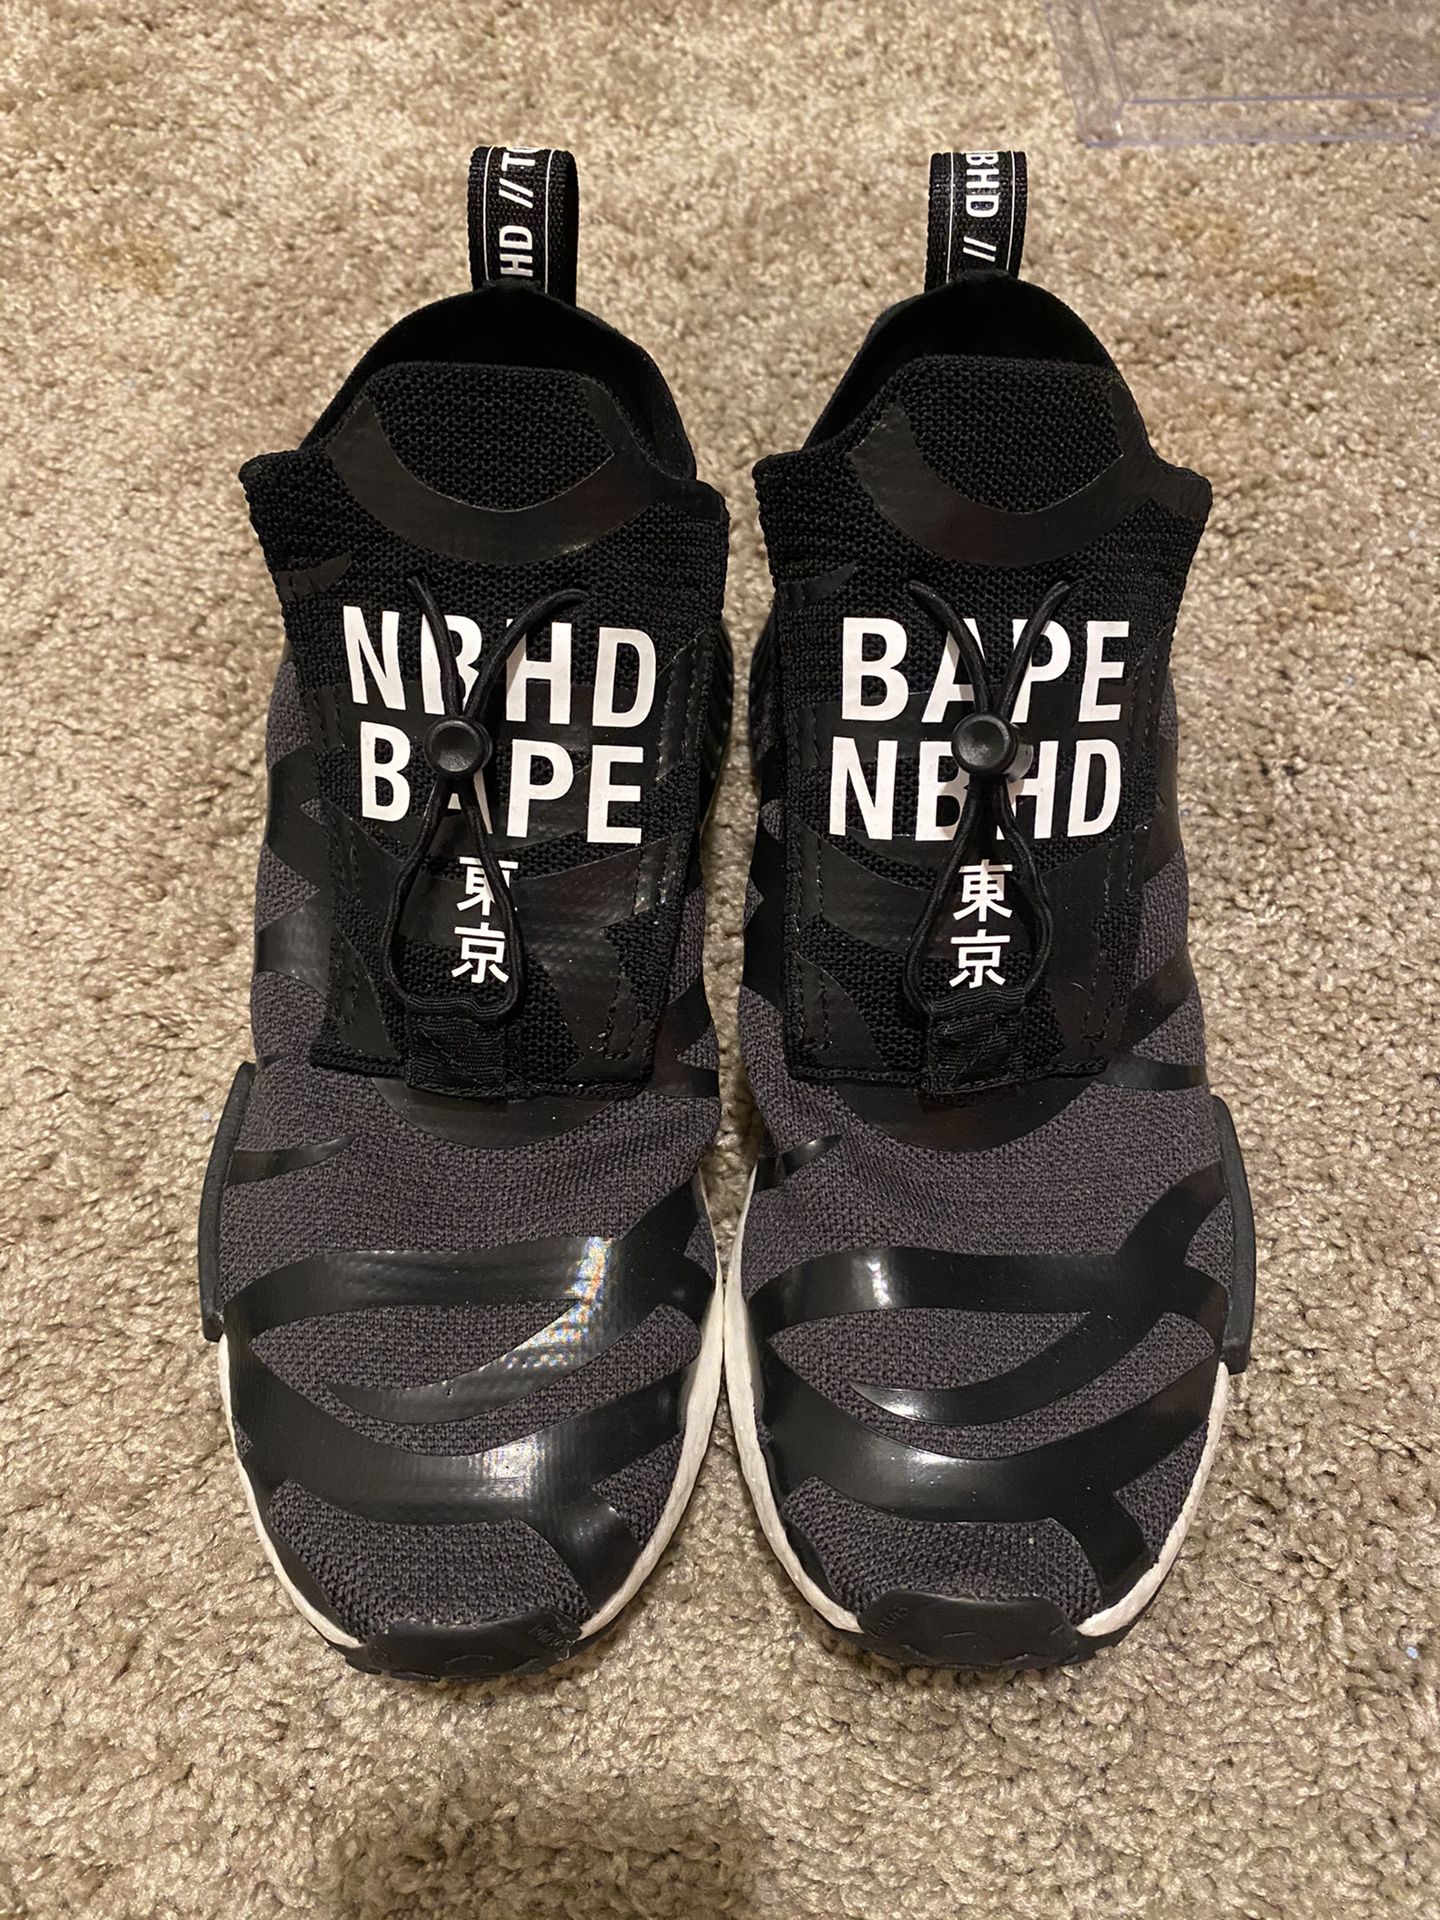 Adidas NMD TS1 Bape x NBHD Size 10